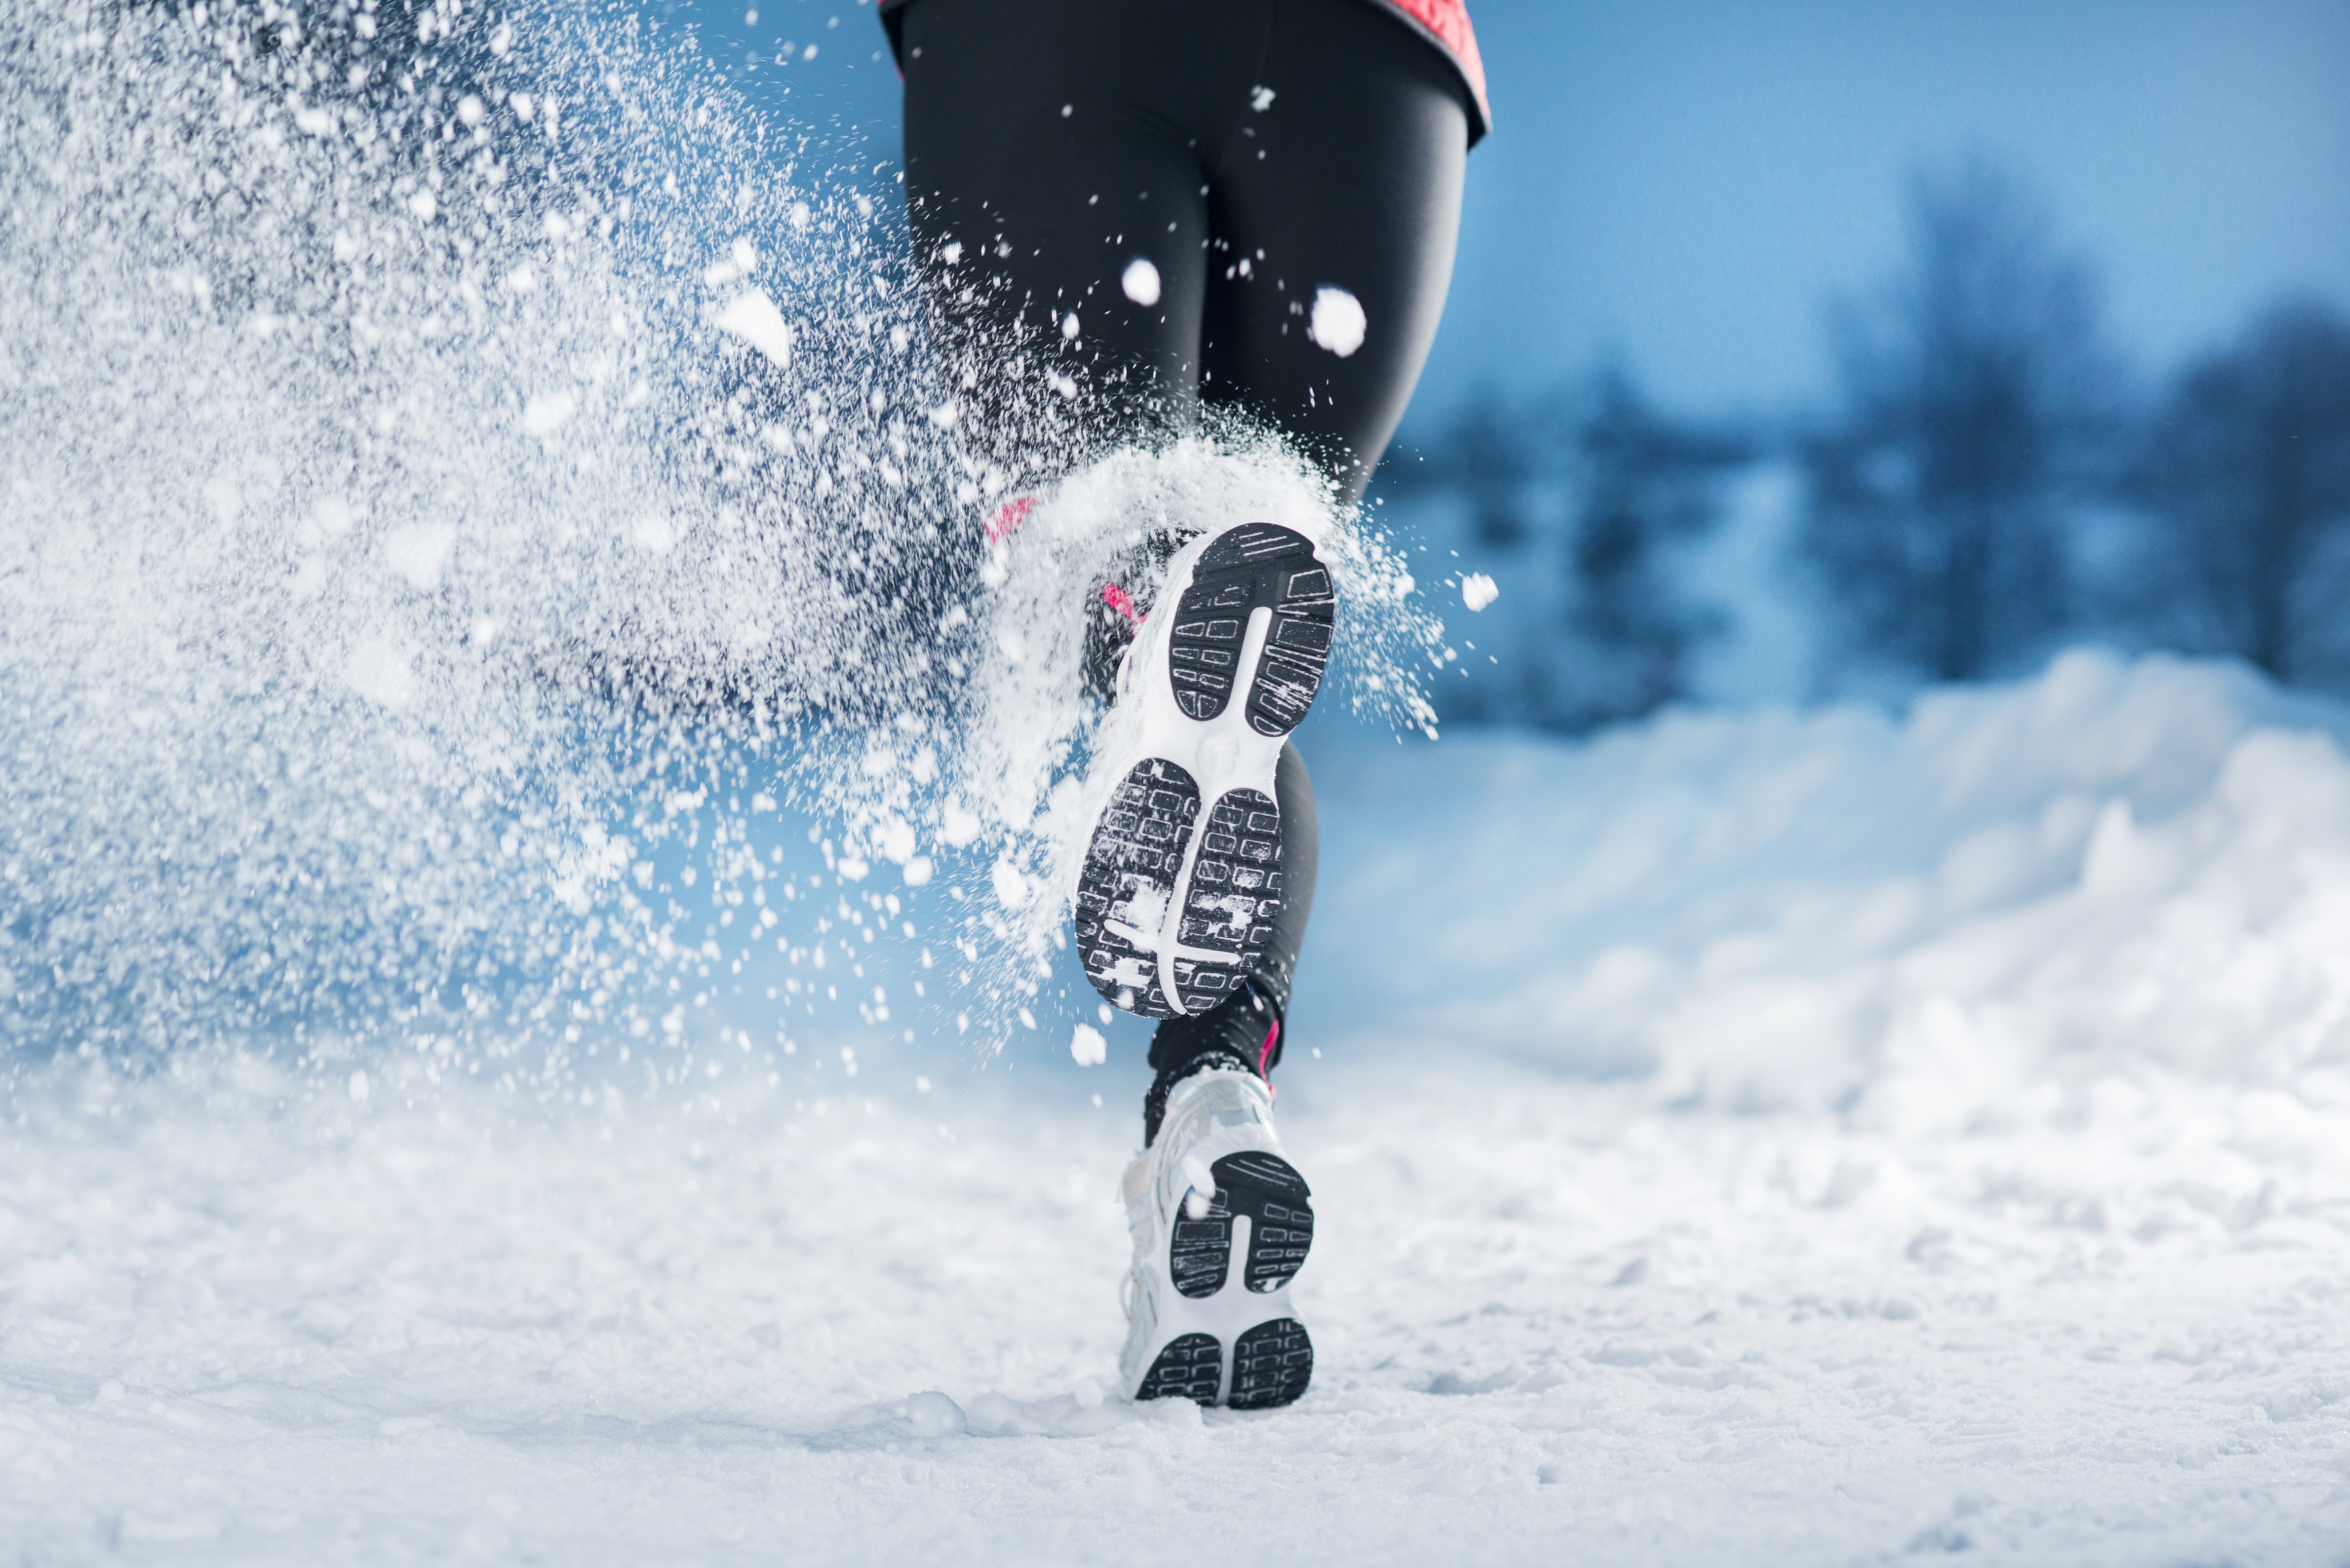 General 4760x3177 running winter snow sneakers sport women outdoors shoes